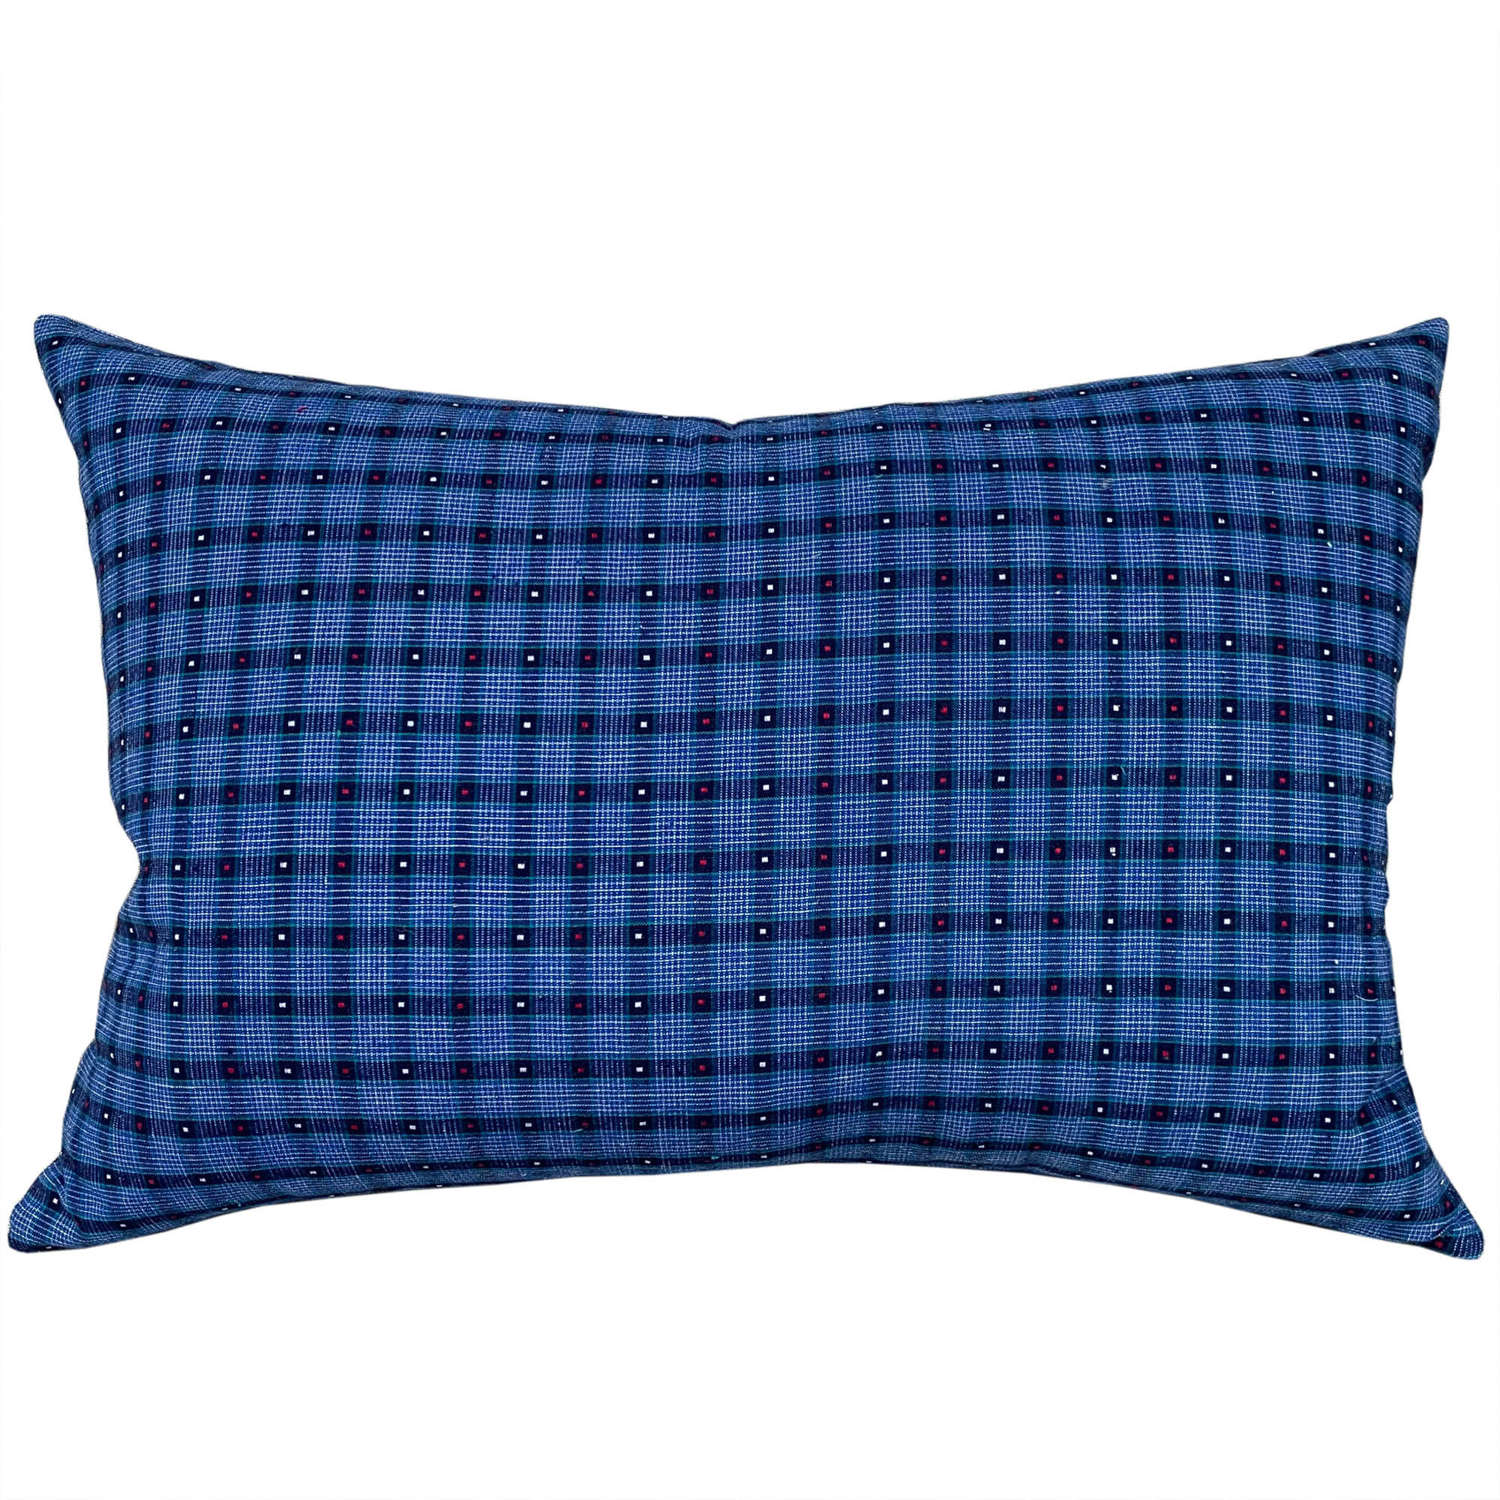 Songjiang cushions, dark blue check